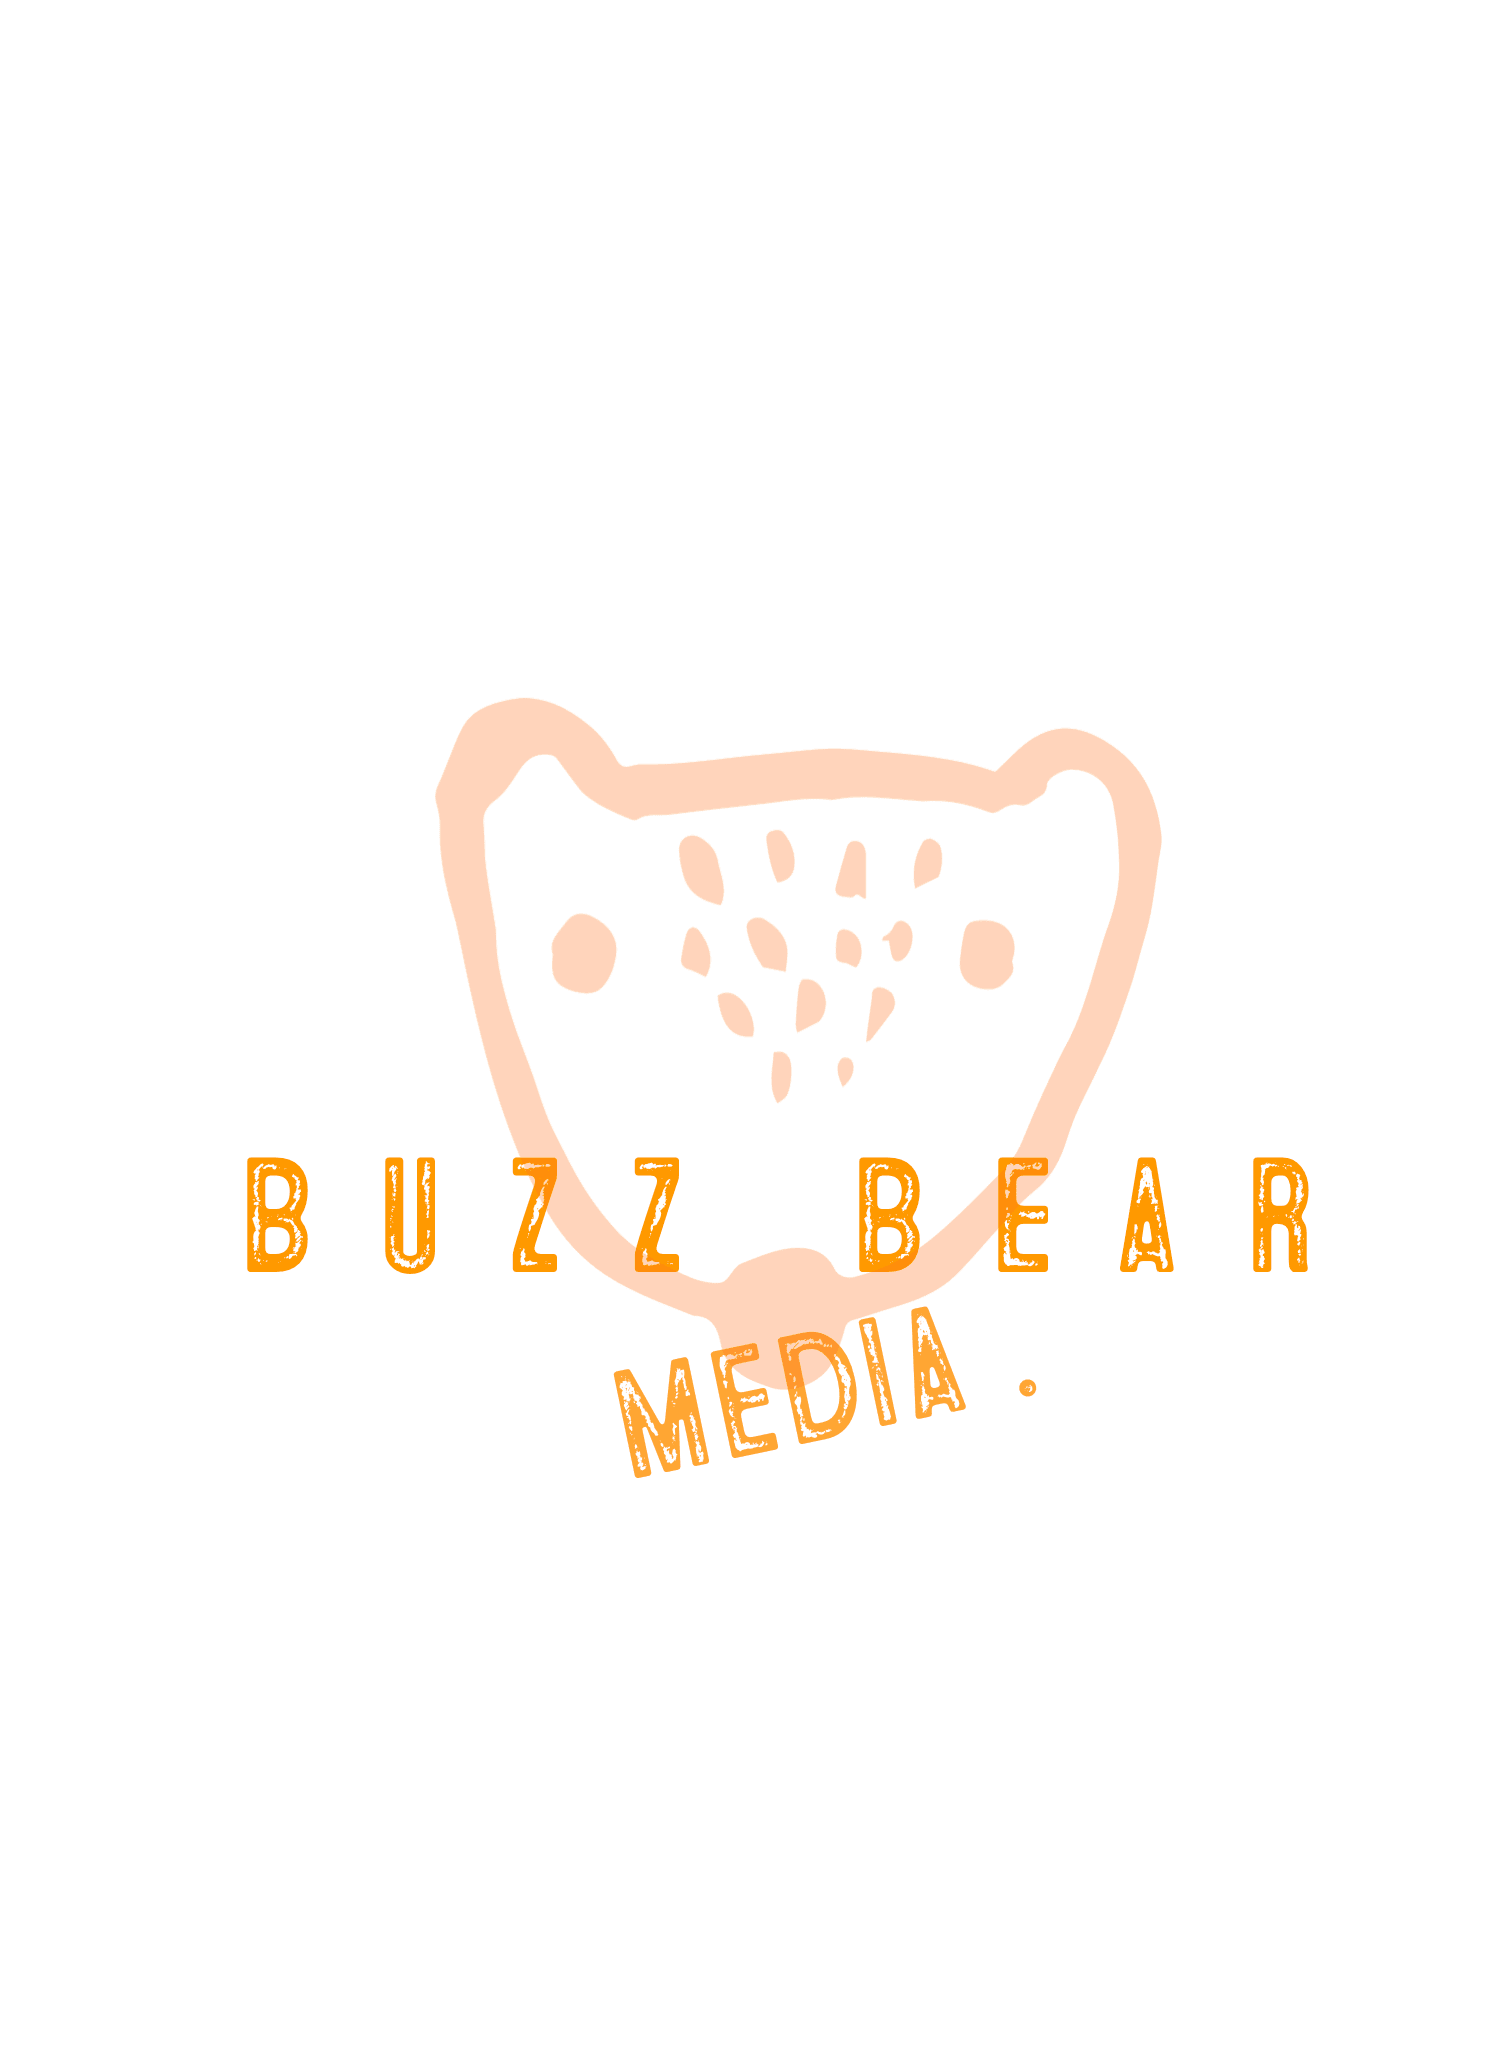 Buzz Bear Media